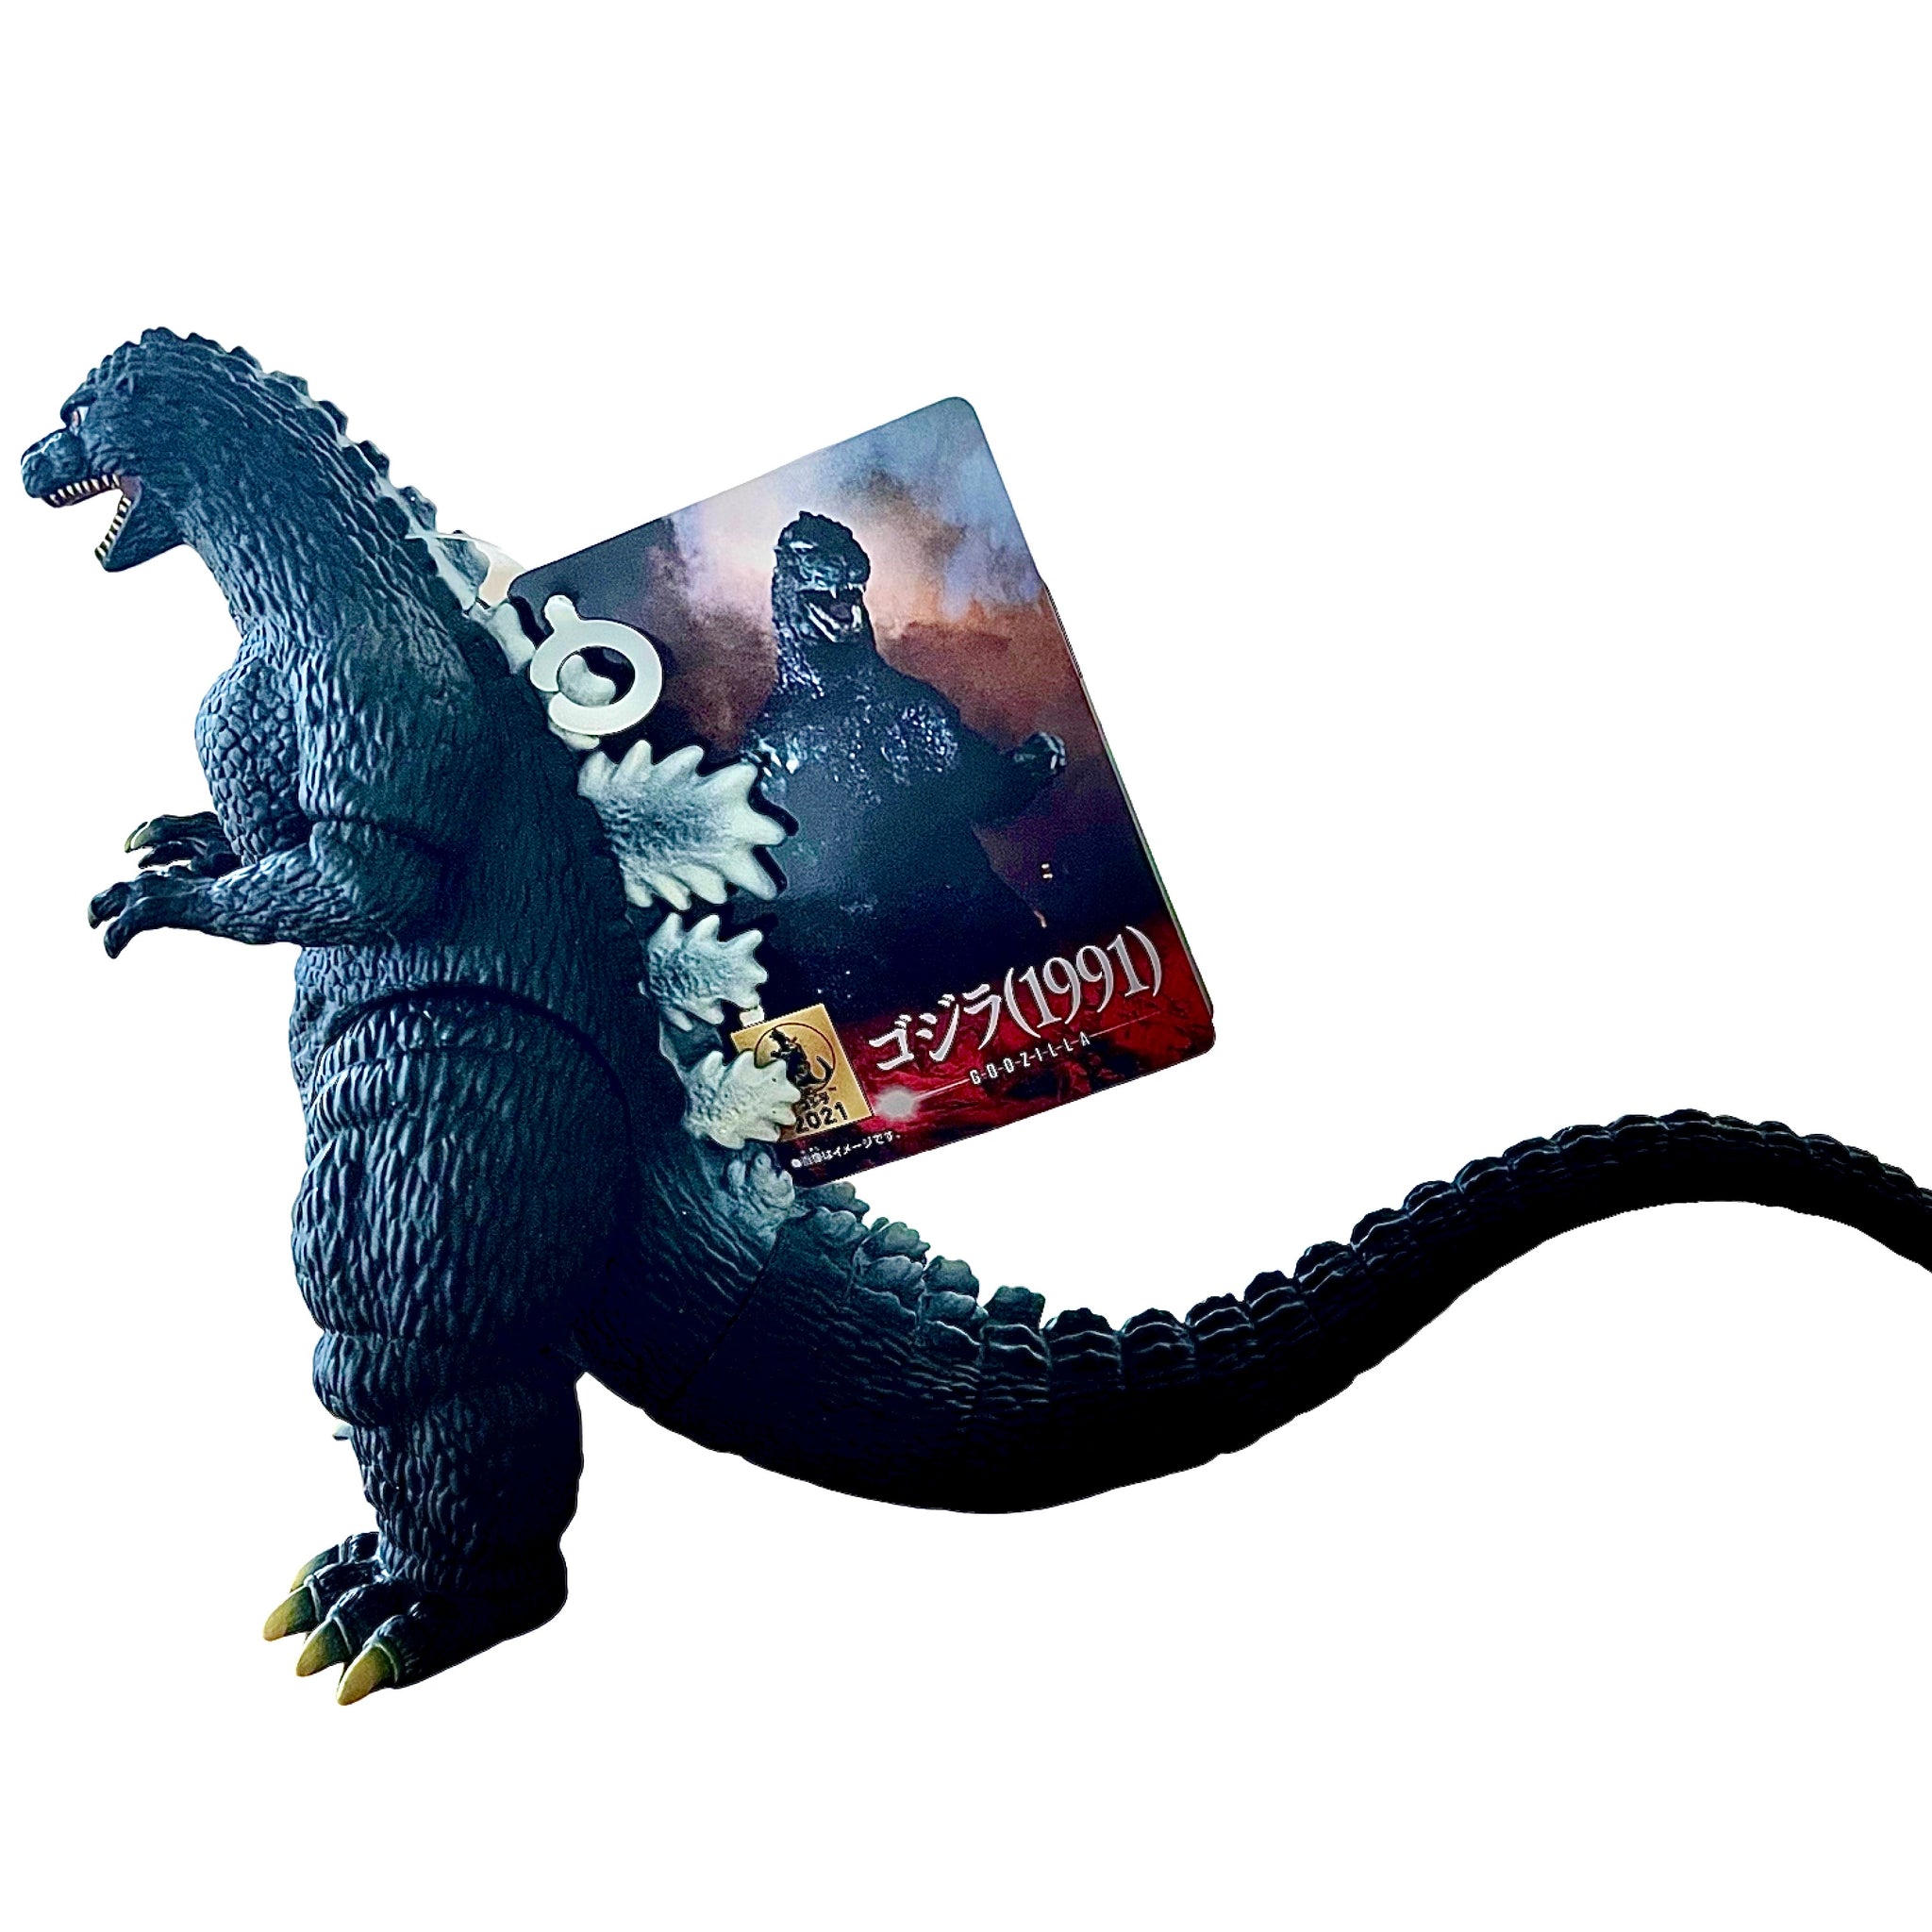 Godzilla 1991 Movie Monster Series 6 inch Soft Vinyl Toy Figure by Bandai